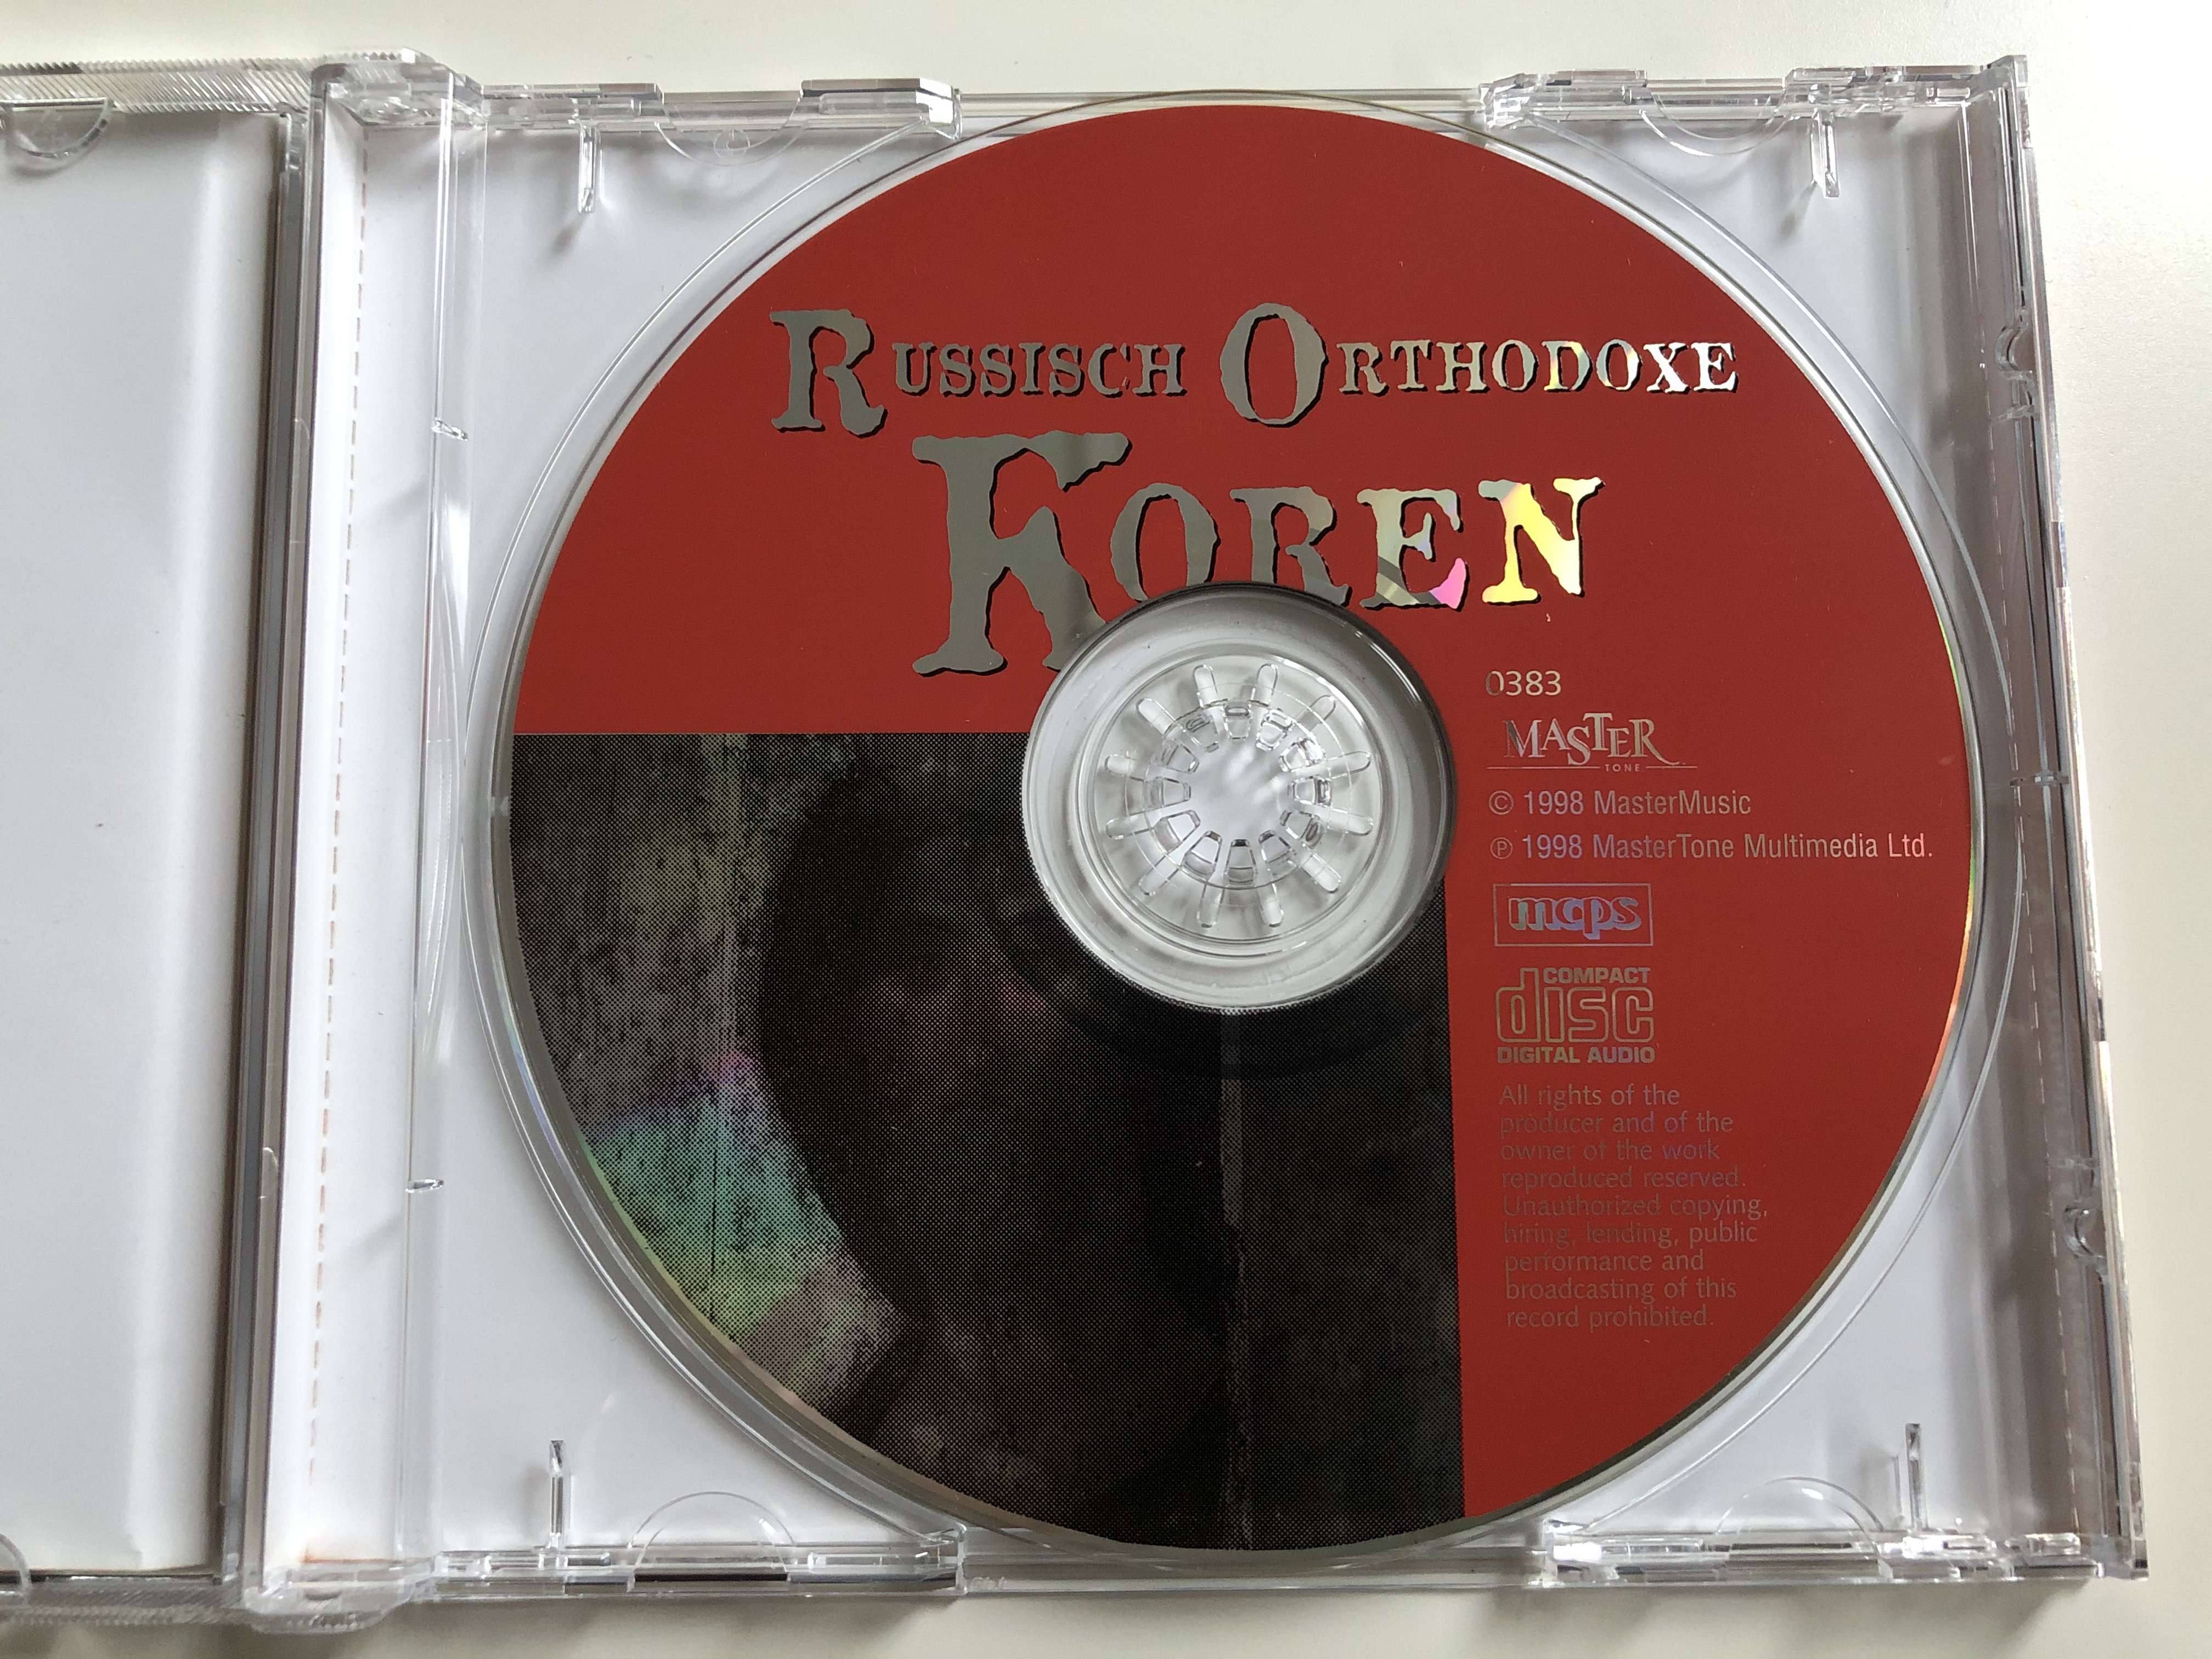 russisch-orthodoxe-koren-mastertone-audio-cd-1998-0383-3-.jpg